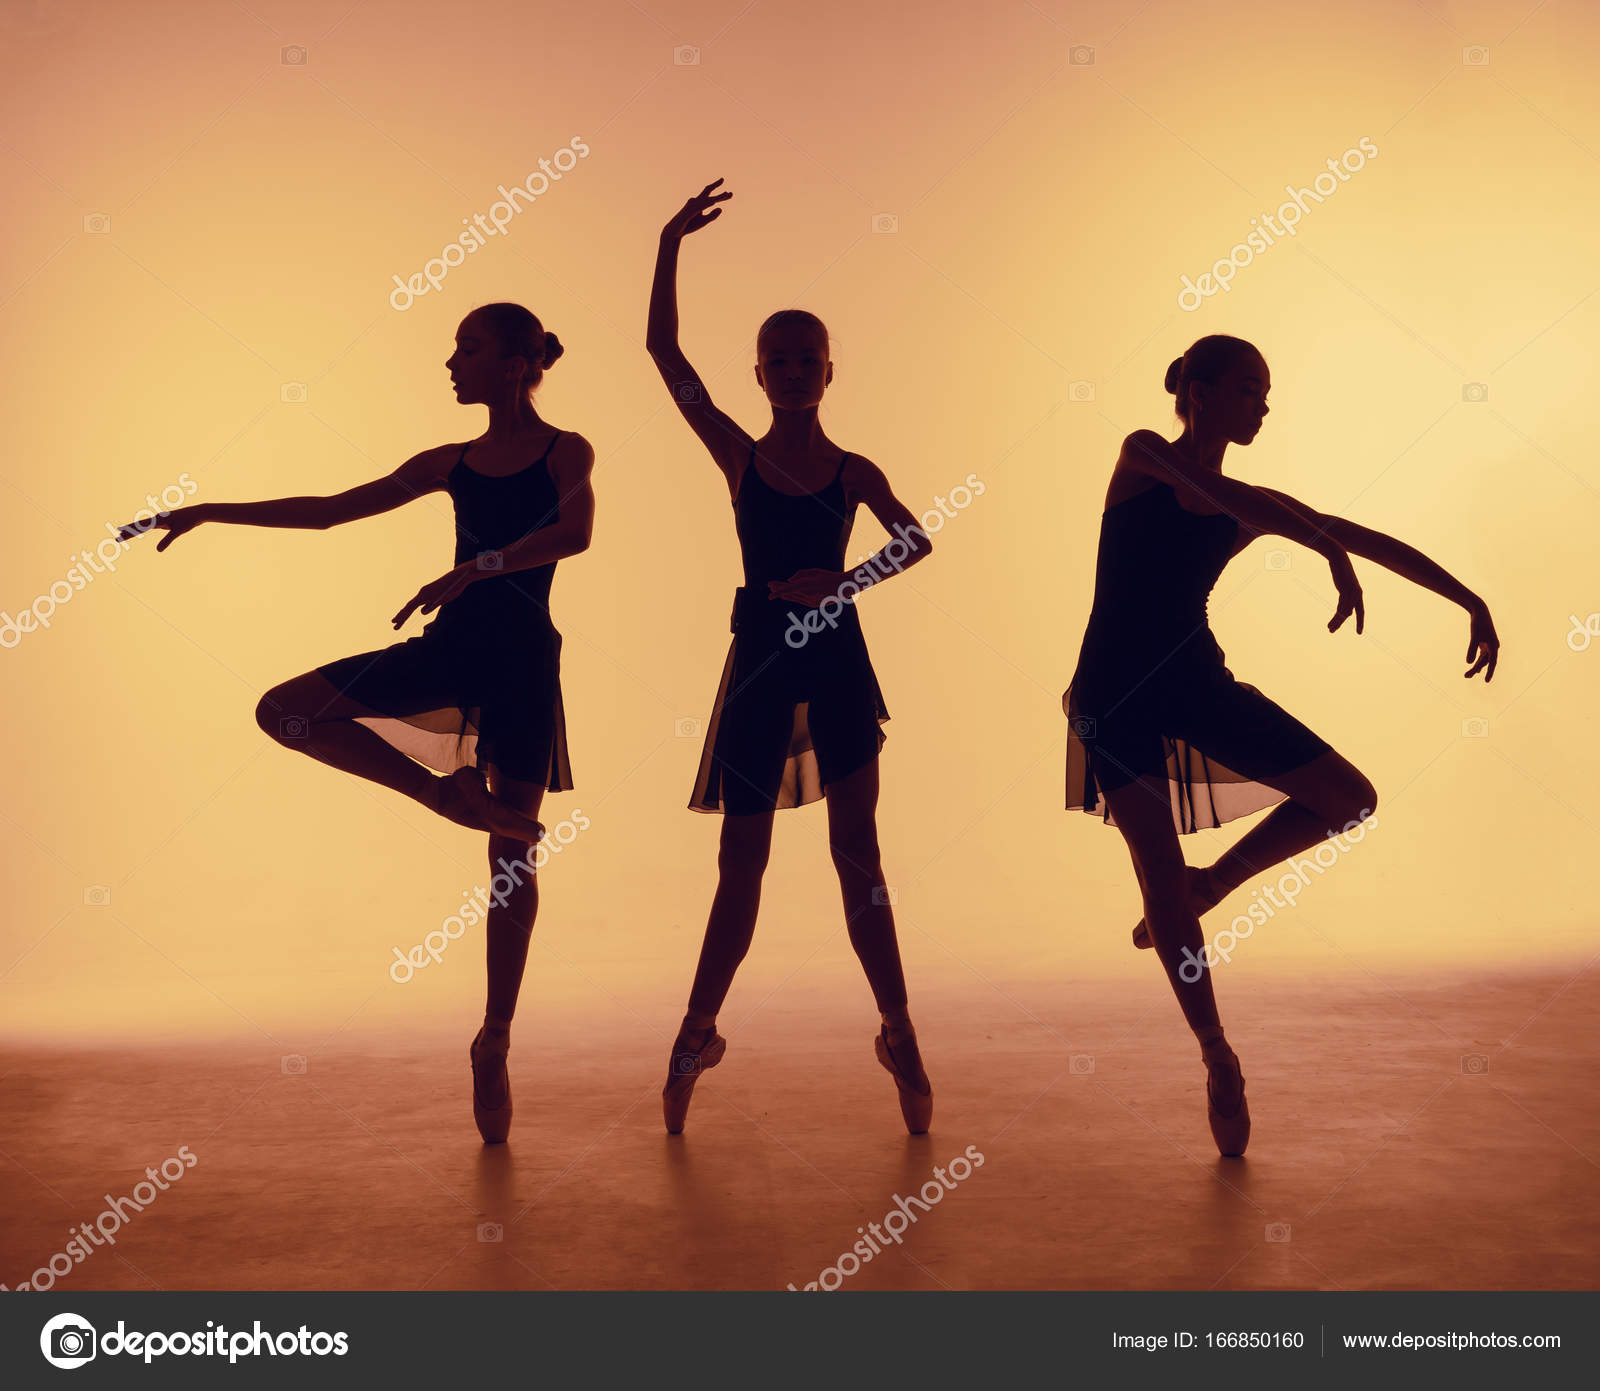 Dance Images - Free Download on Freepik